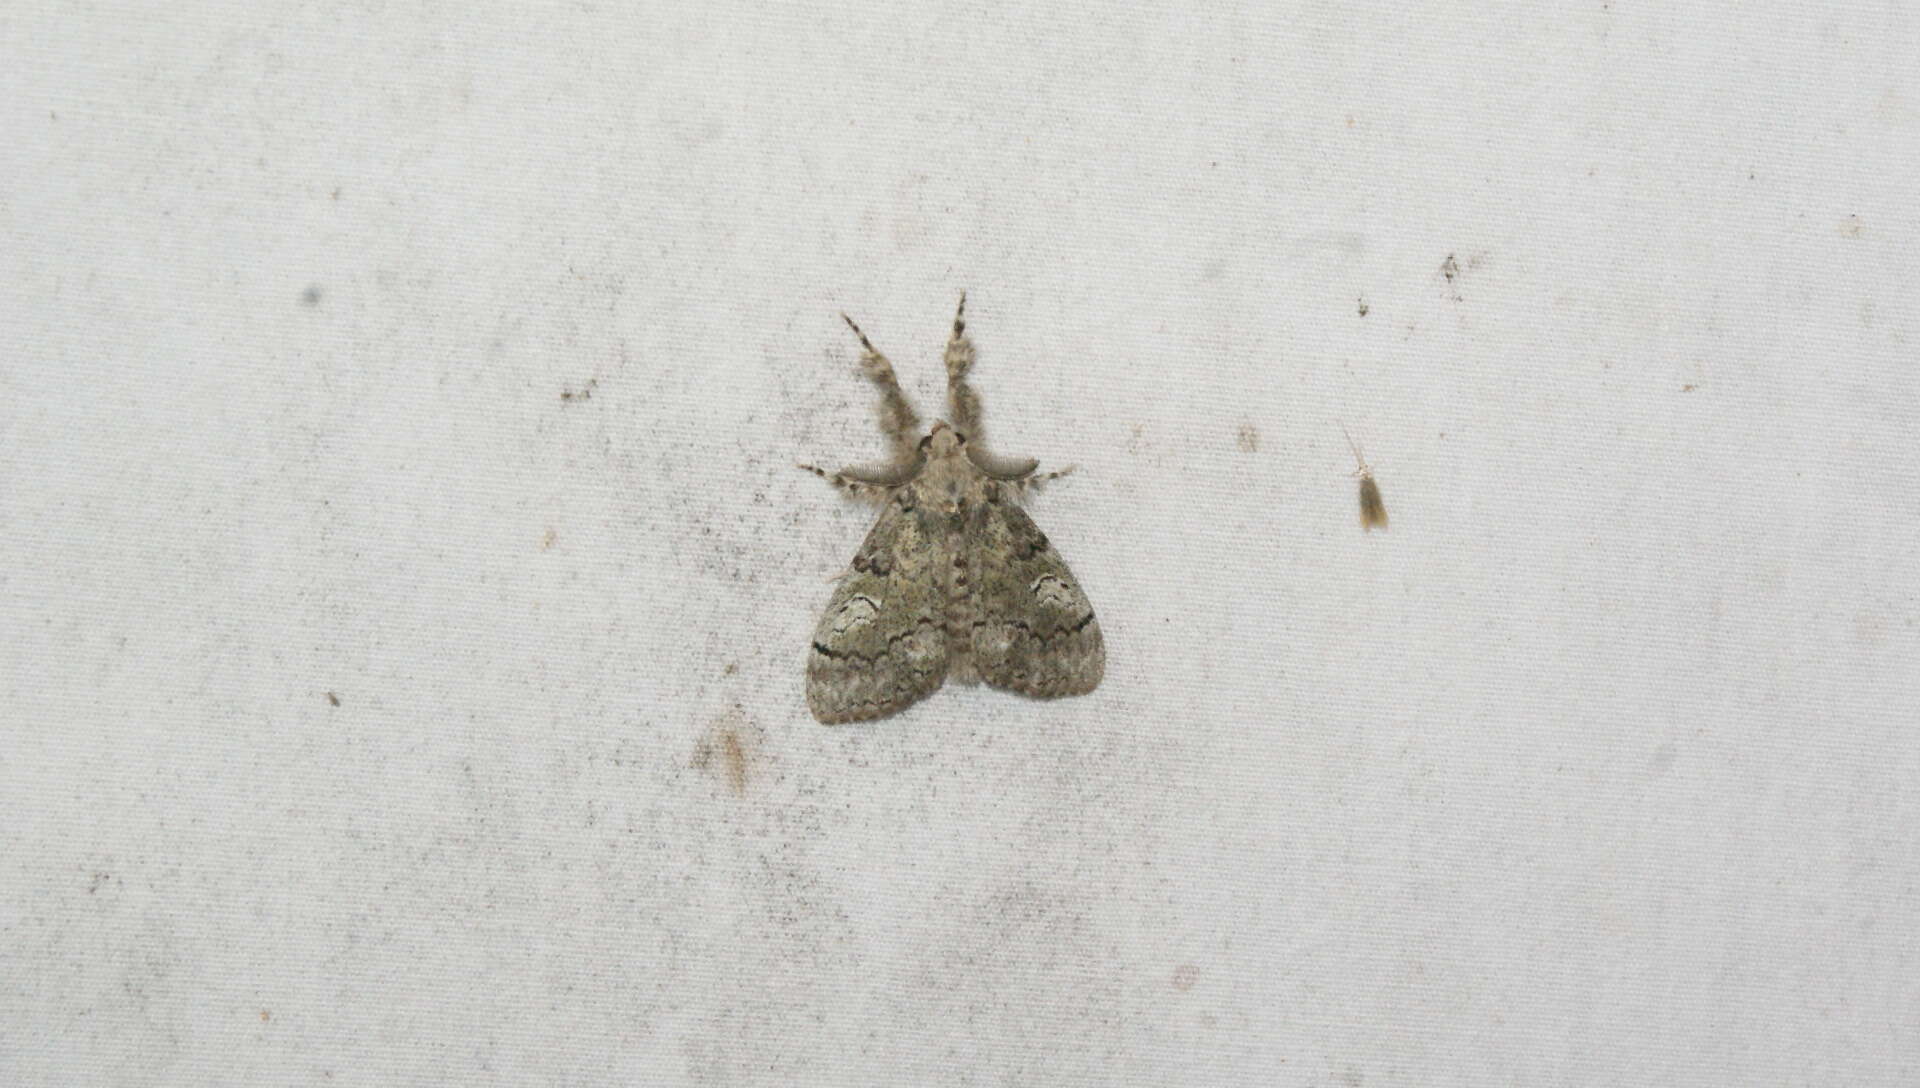 Image of Northern Pine Tussock Moth